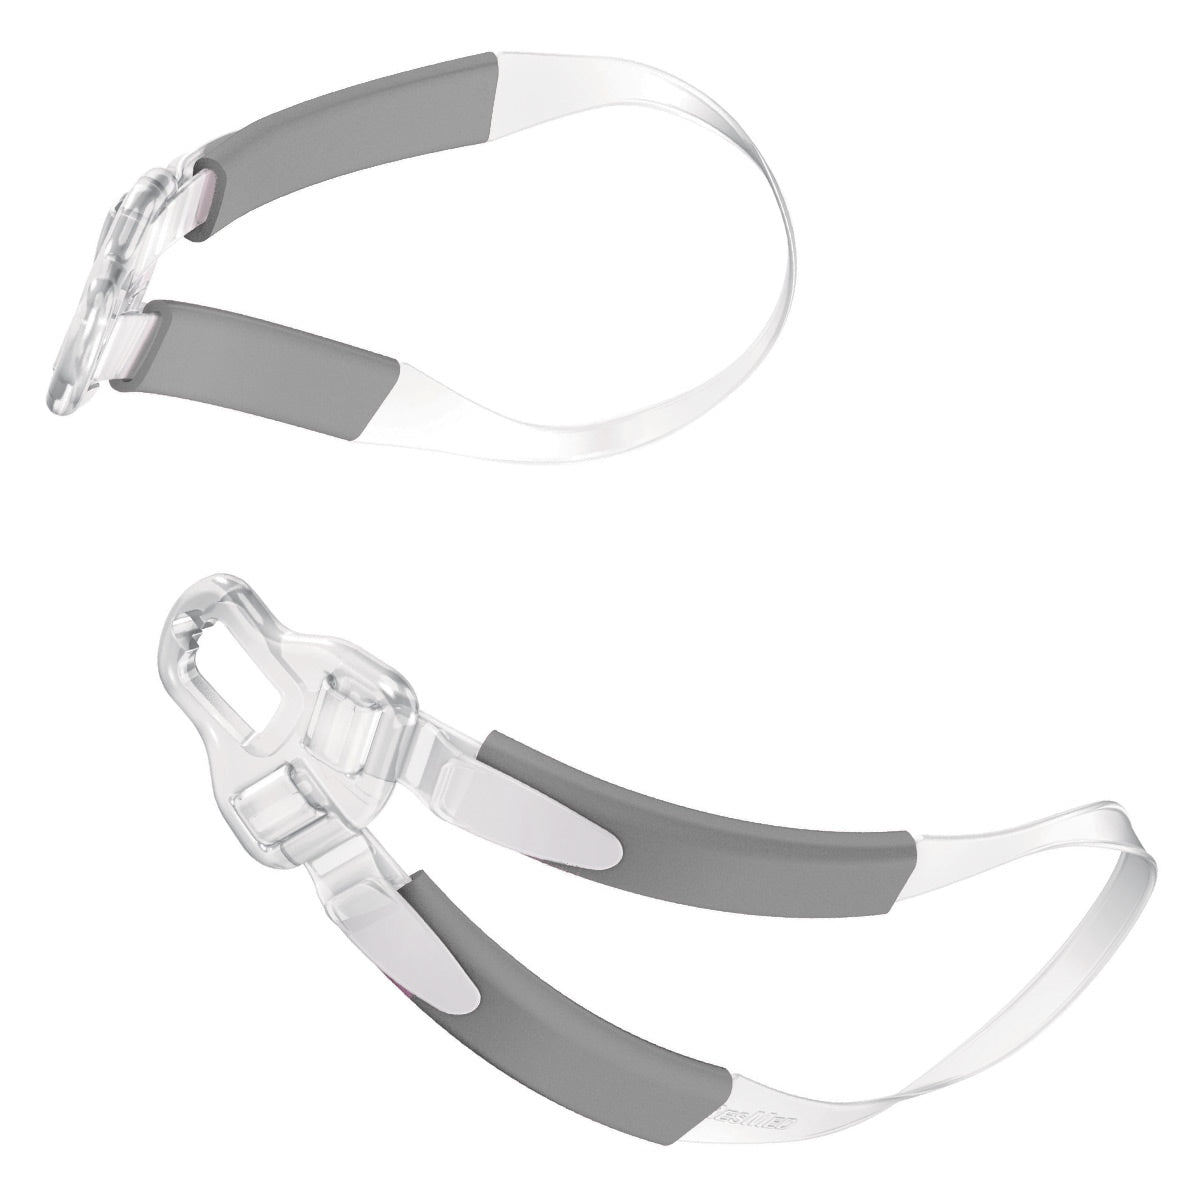 Bella Loops Headgear for Swift FX & Swift FX For Her CPAP/BiLevel Masks